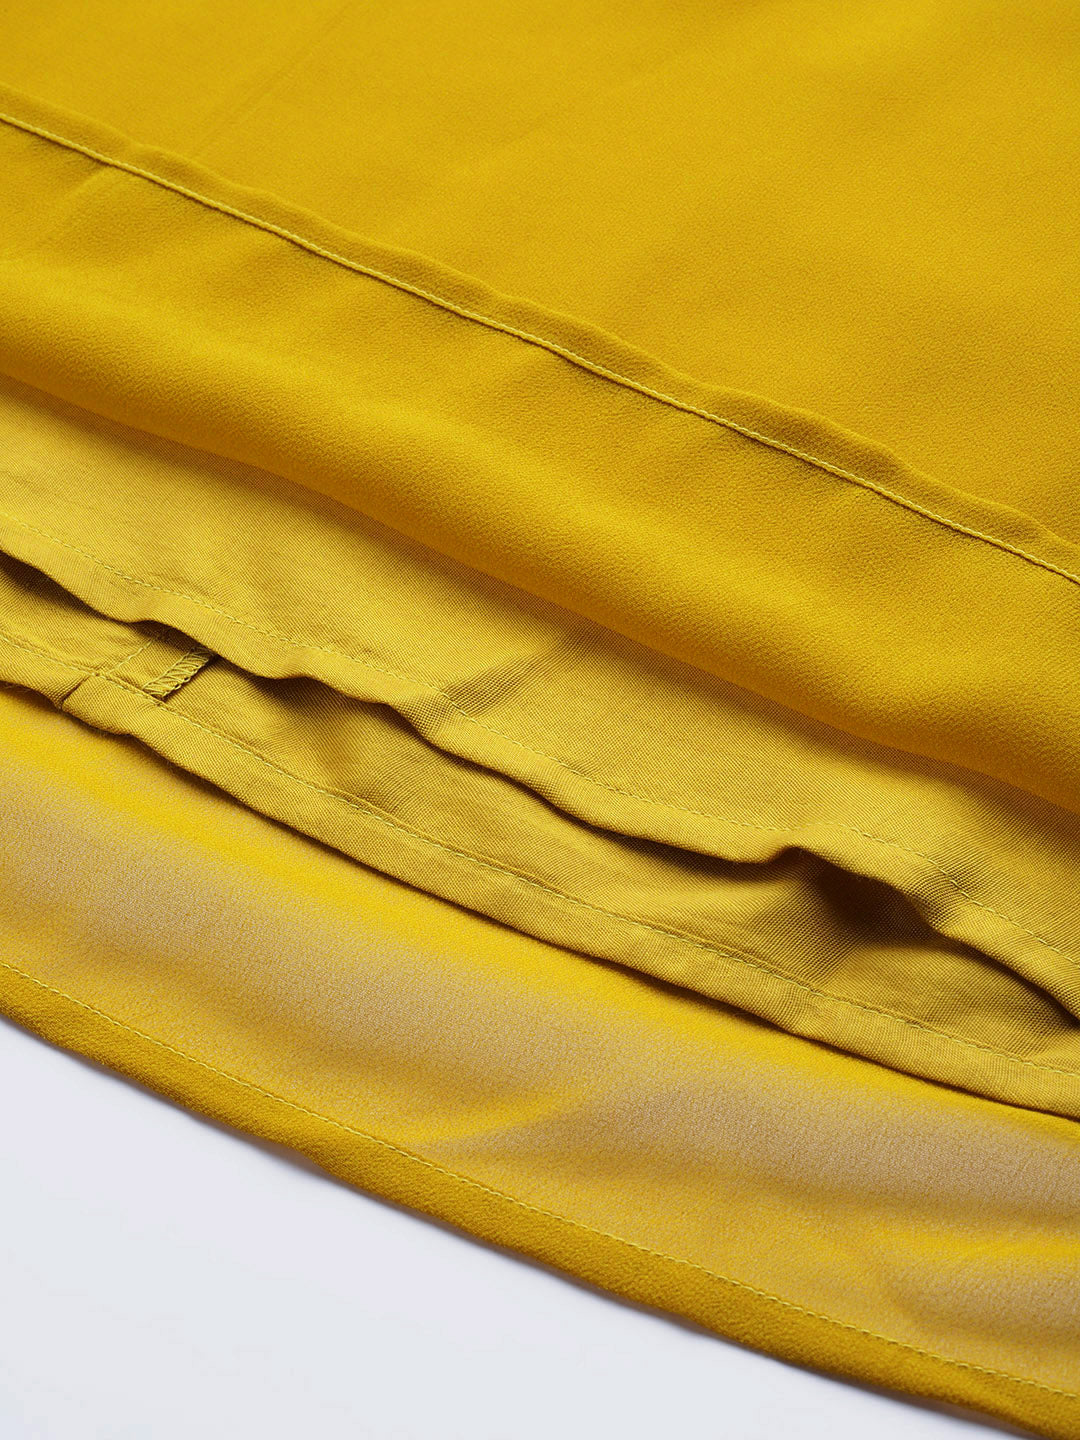 Juniper Women`s Mustard Georgette Embroidered A-Line Dress